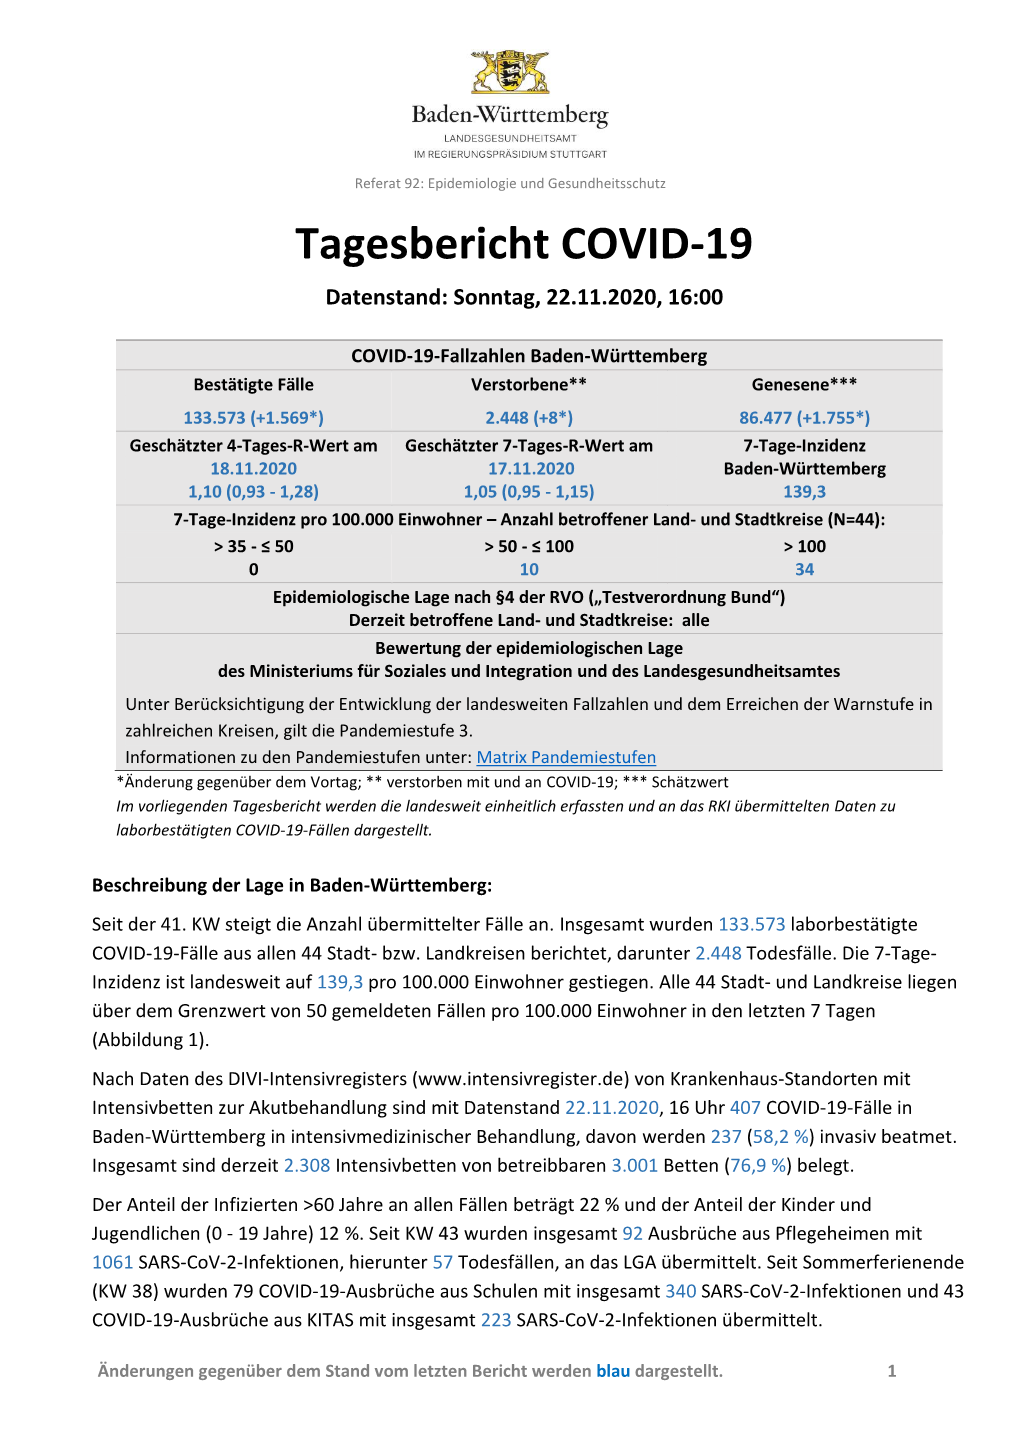 Tagesbericht COVID-19 Baden-Württemberg 22.11.2020